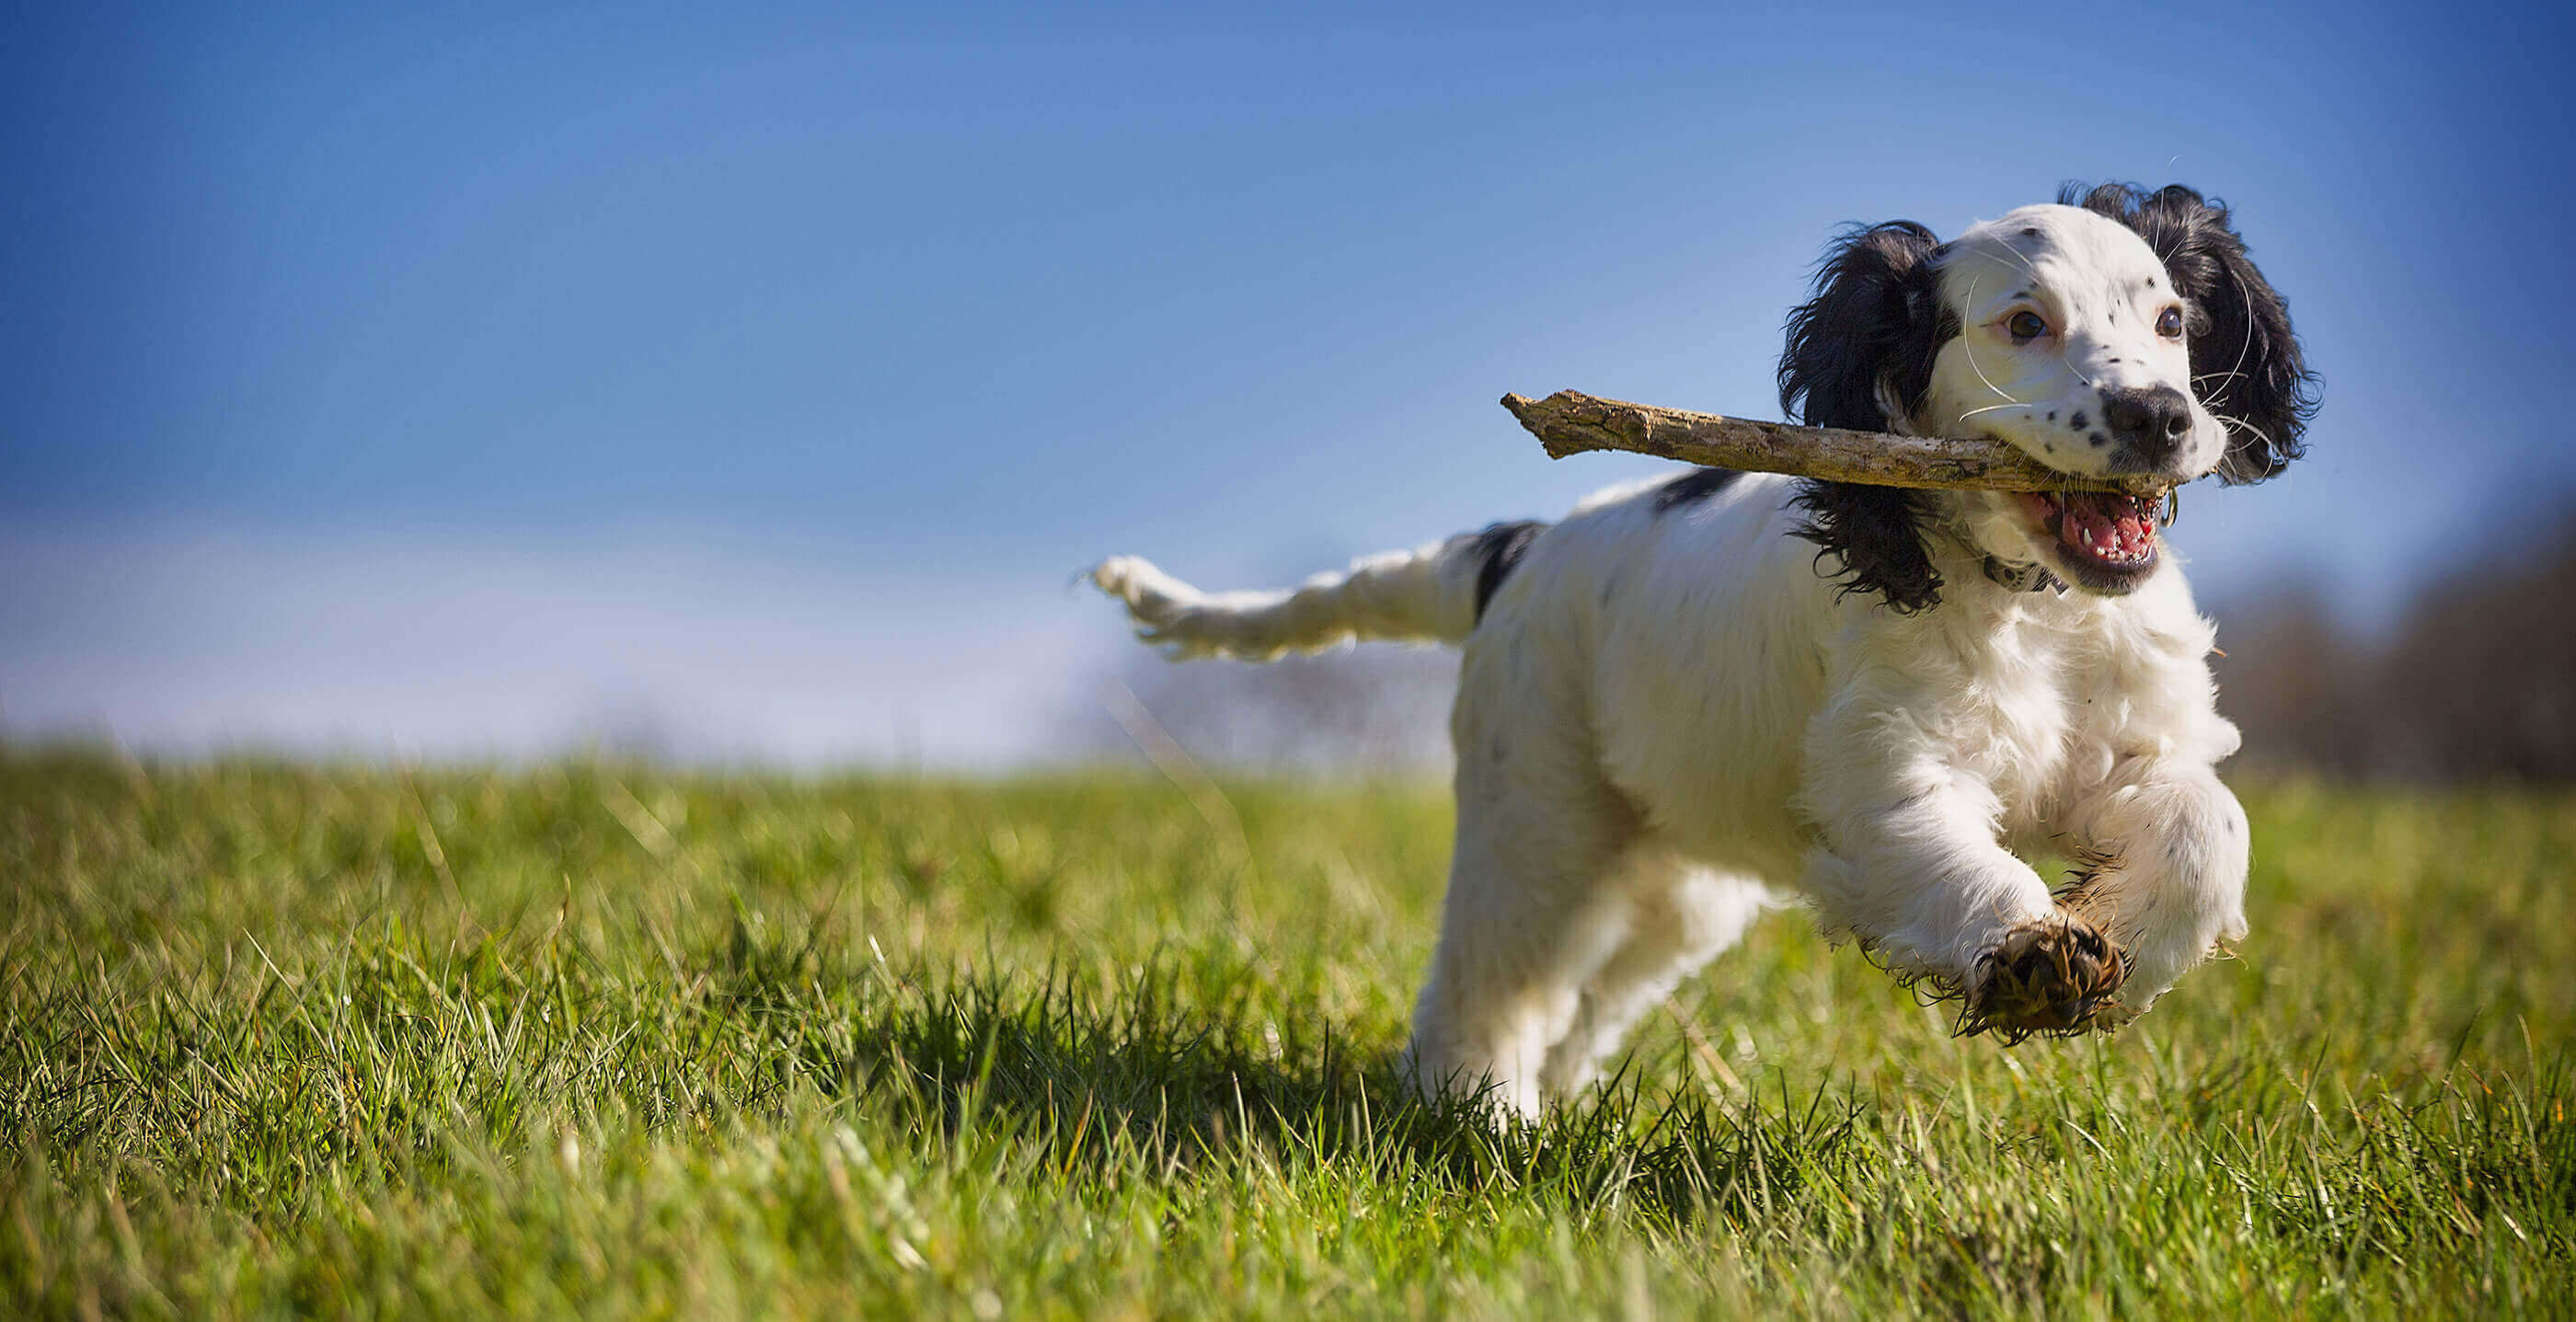 Dog running on grass sipioo